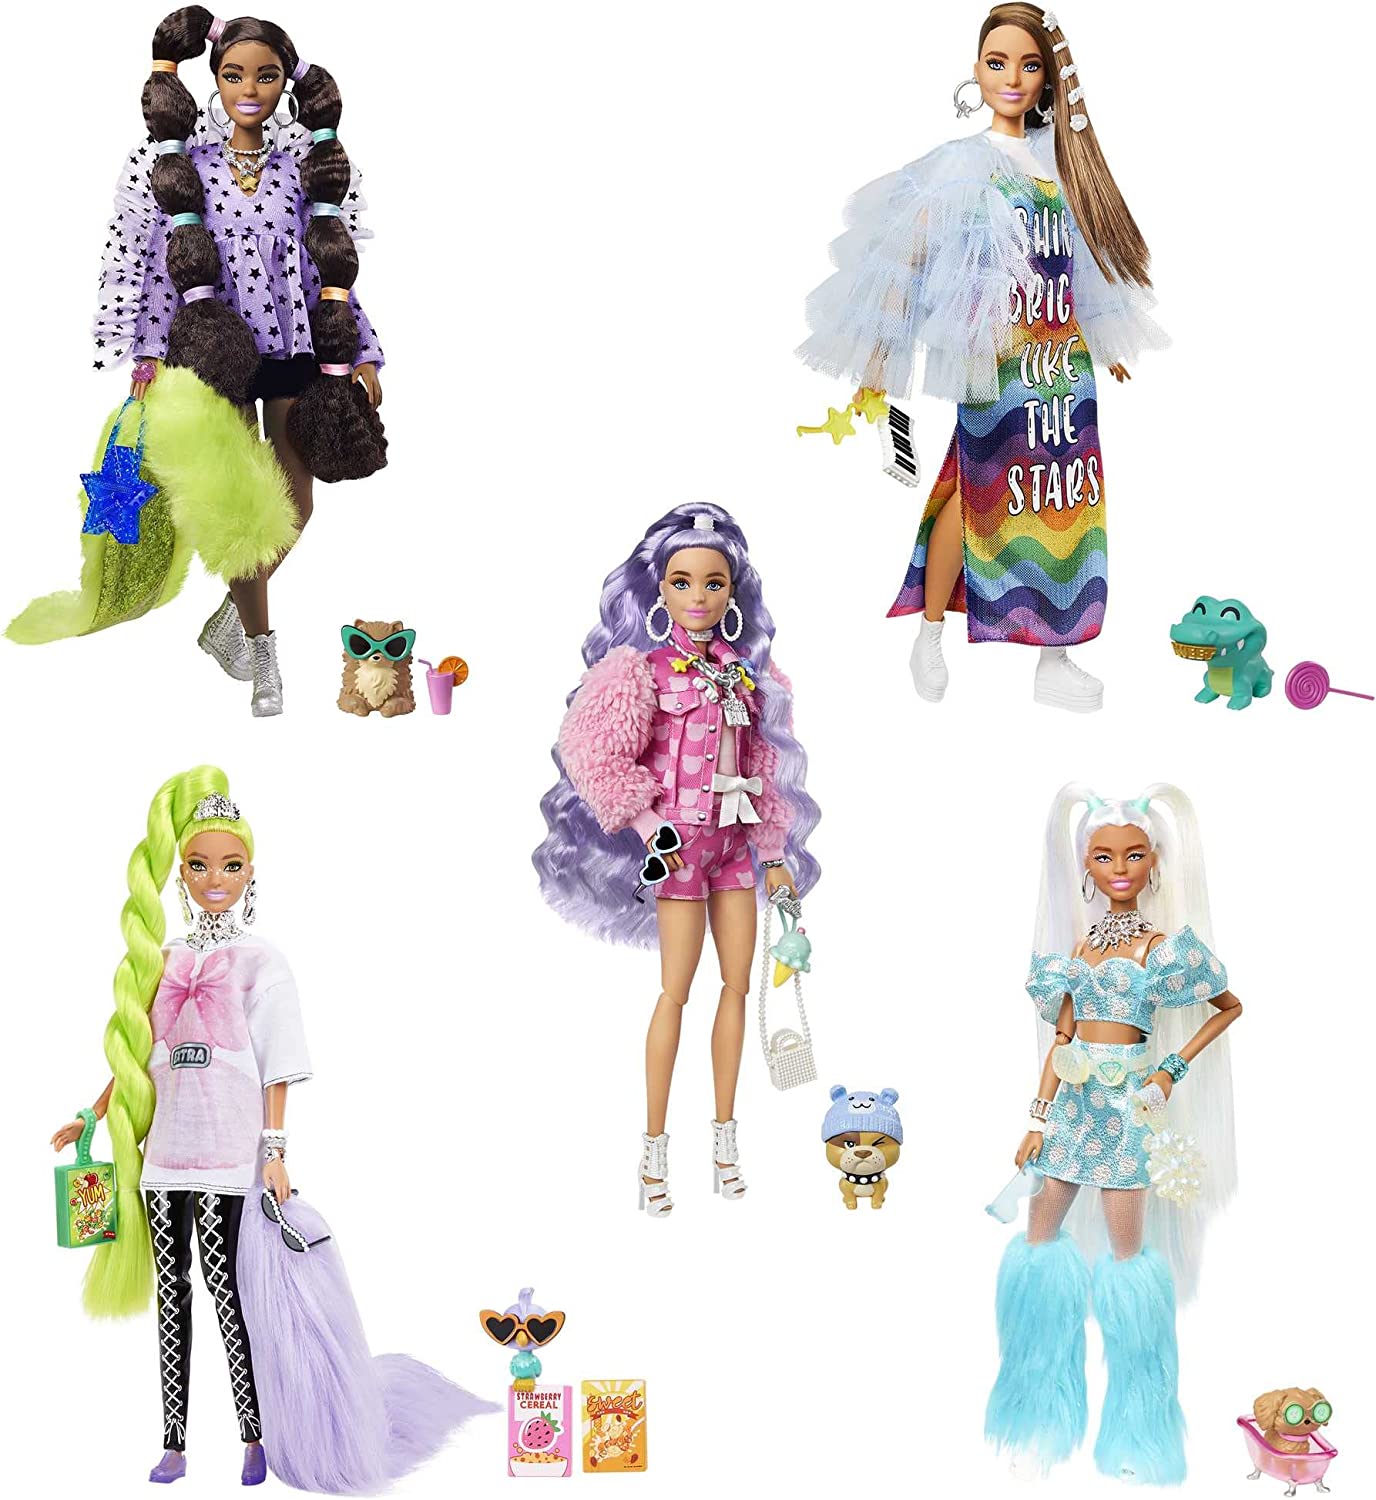 https://www.youloveit.com/uploads/posts/2022-07/1659168490_youloveit_com_barbie_extra_5_dolls_set.jpg